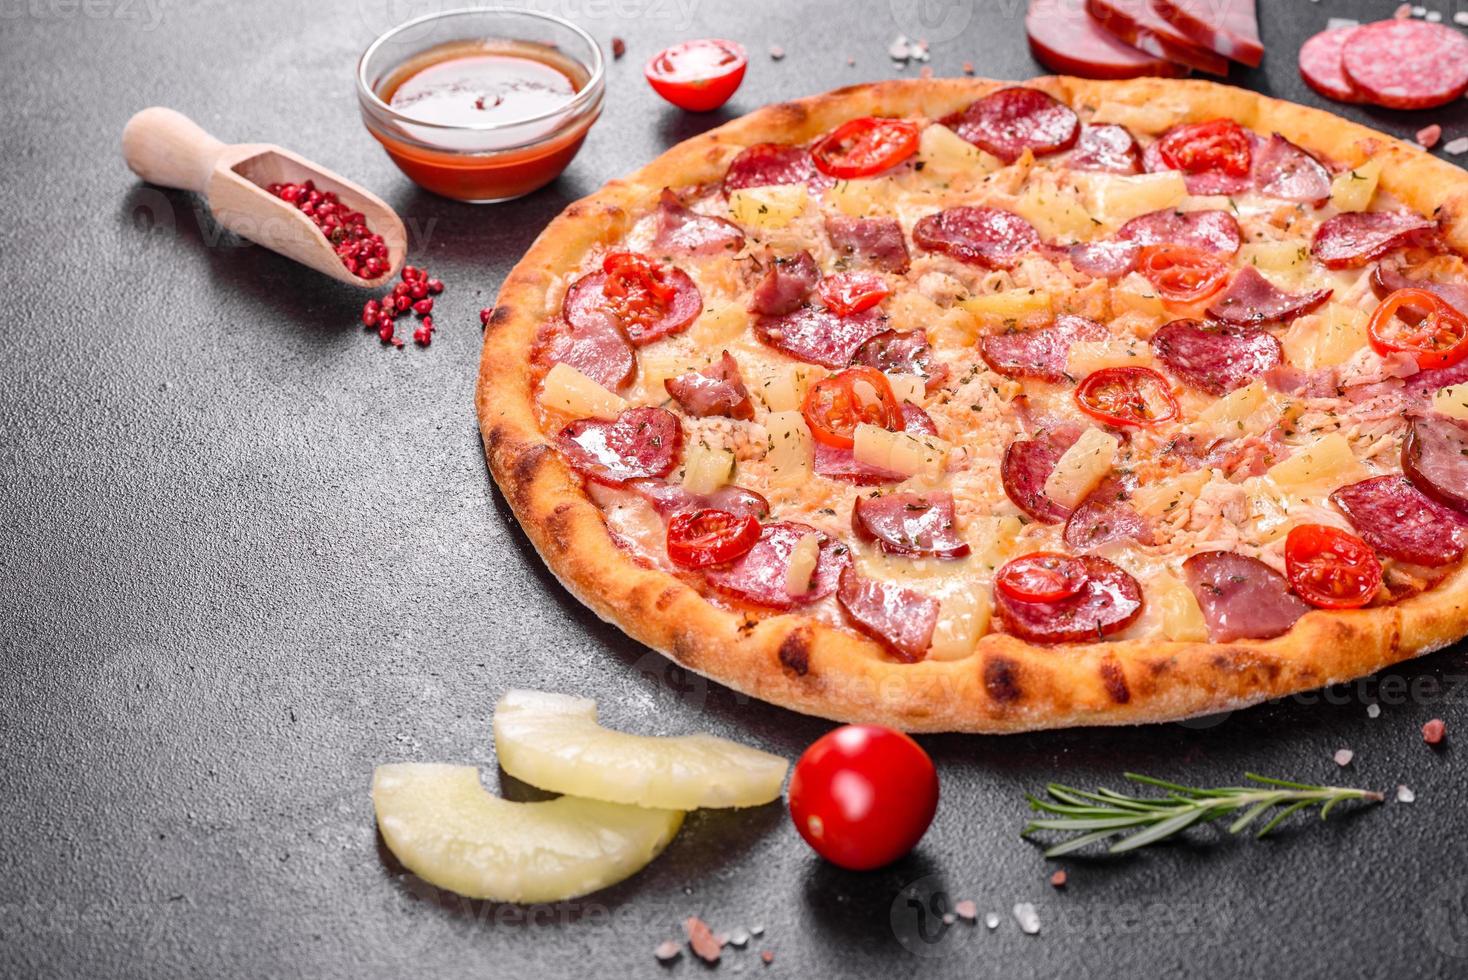 pizza de pepperoni con queso mozzarella, salami, jamón foto